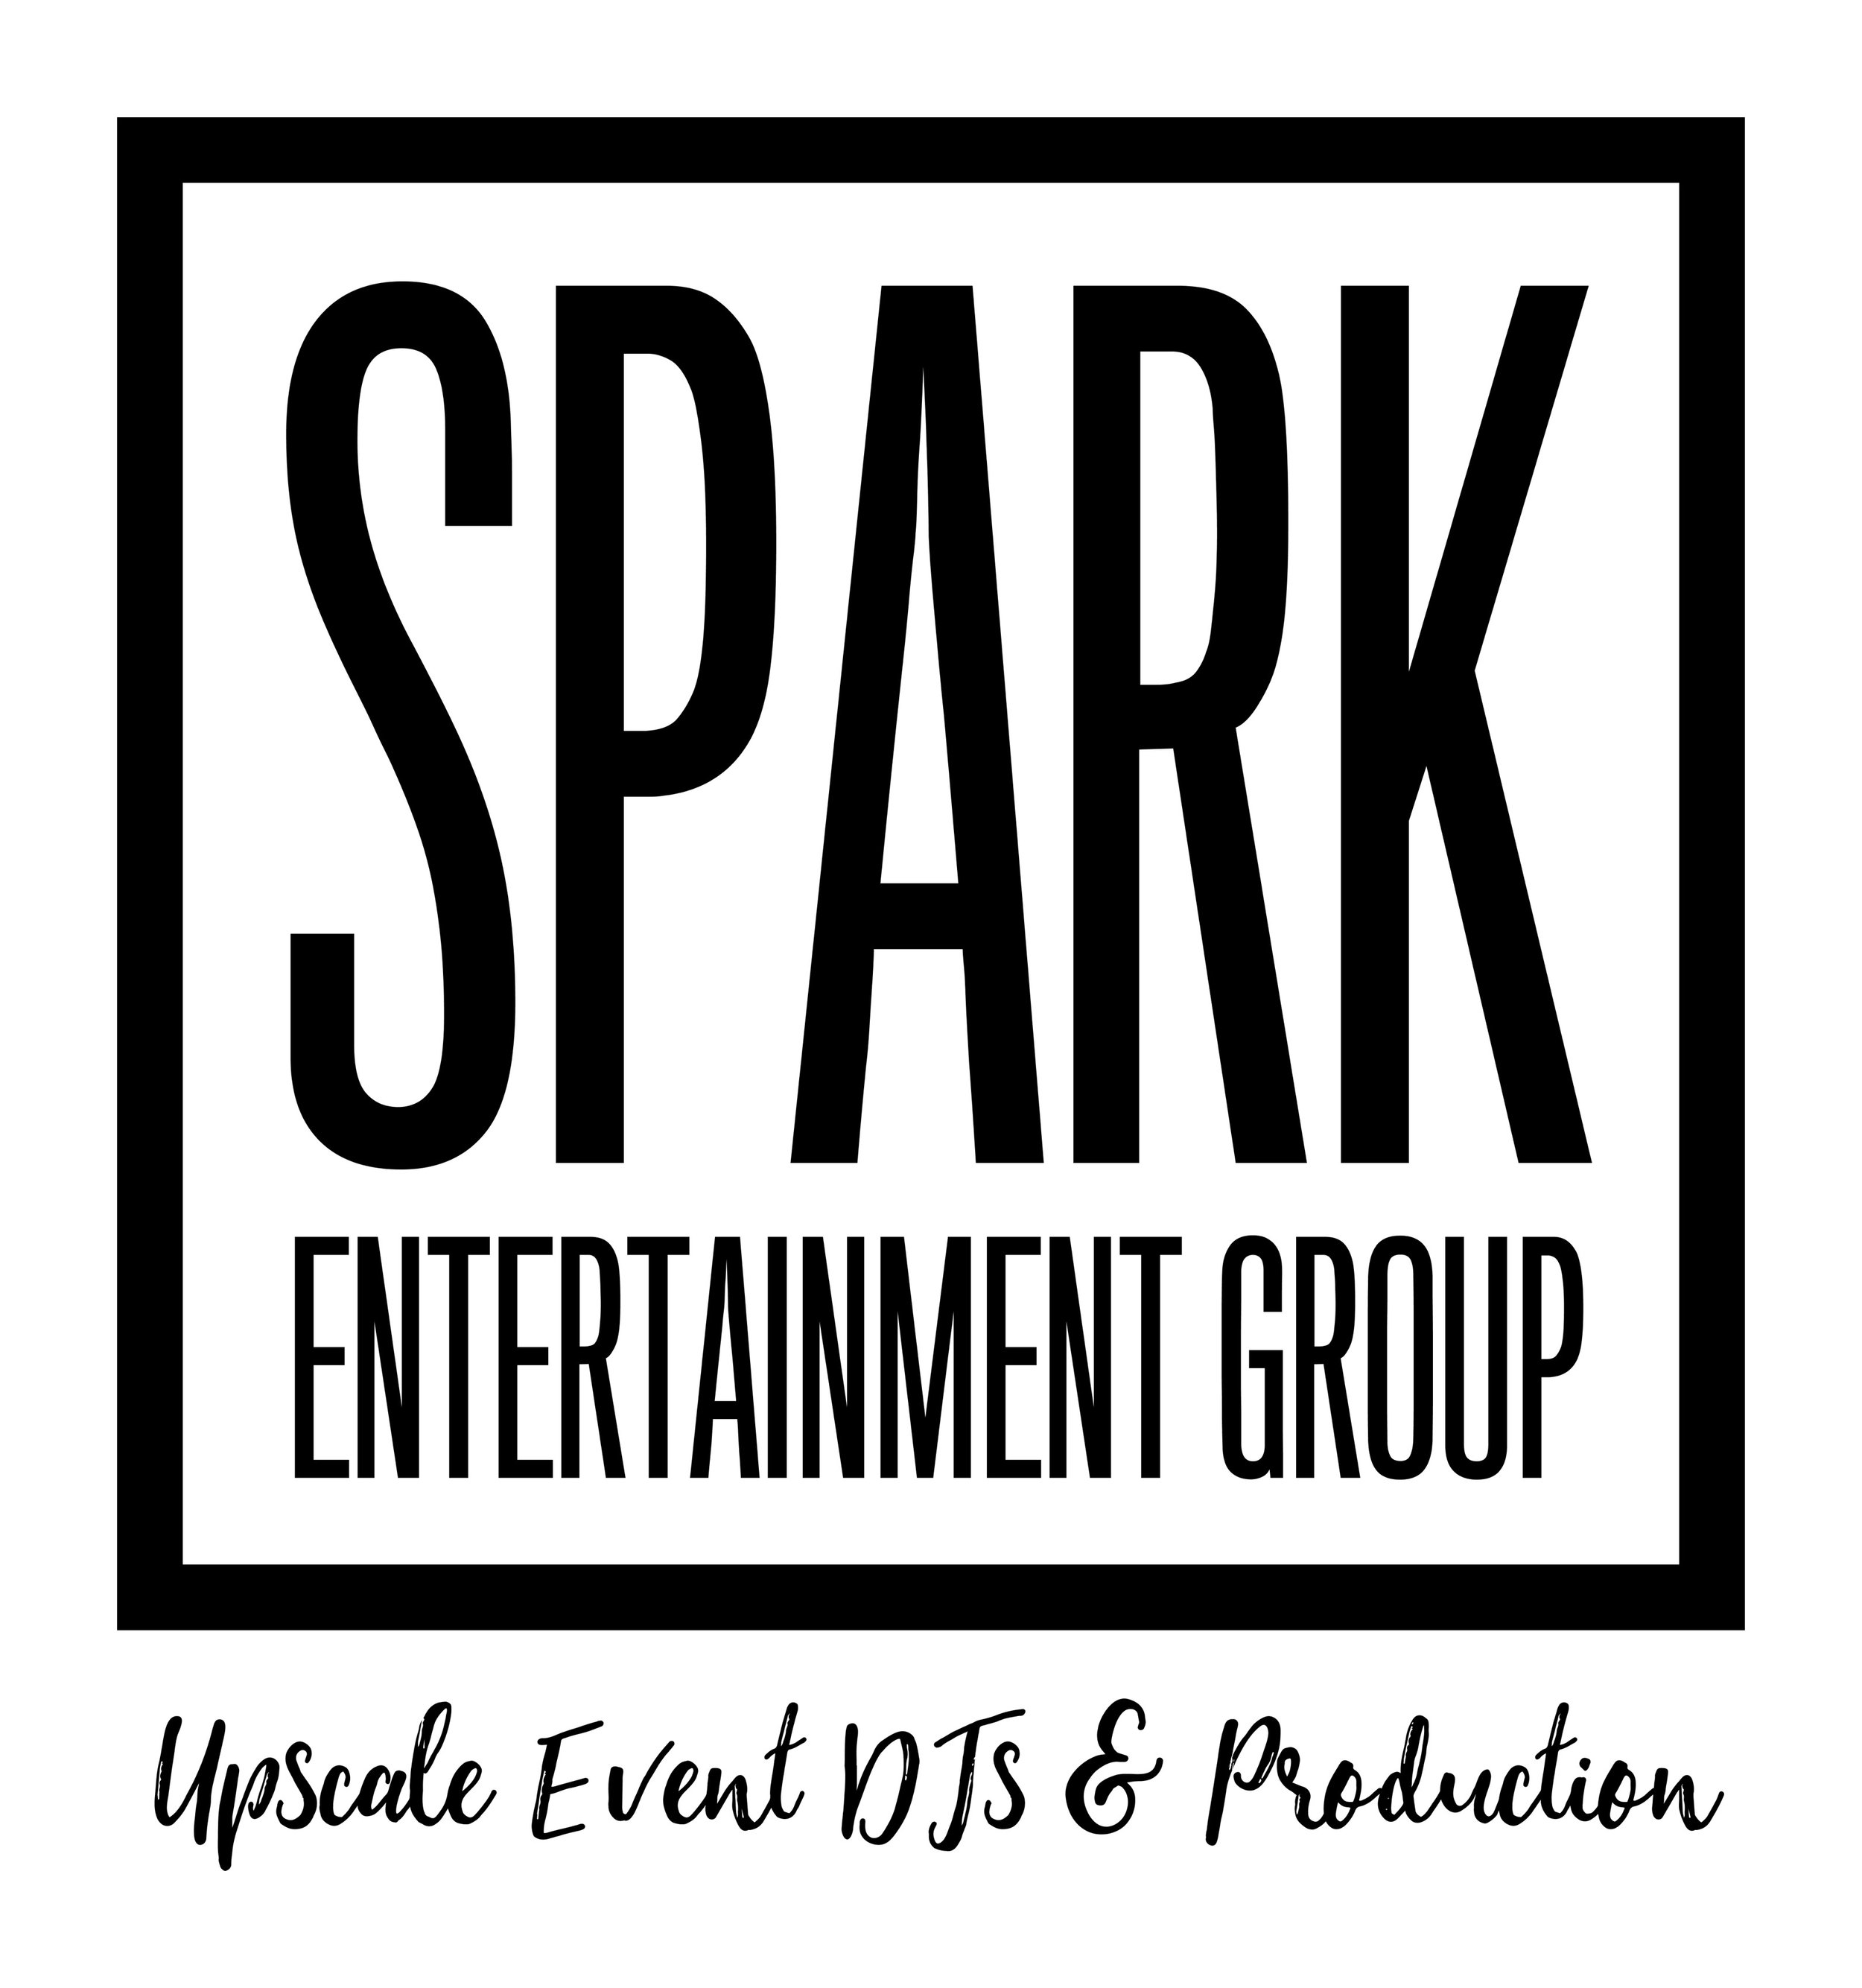 Spark Entertainment Group